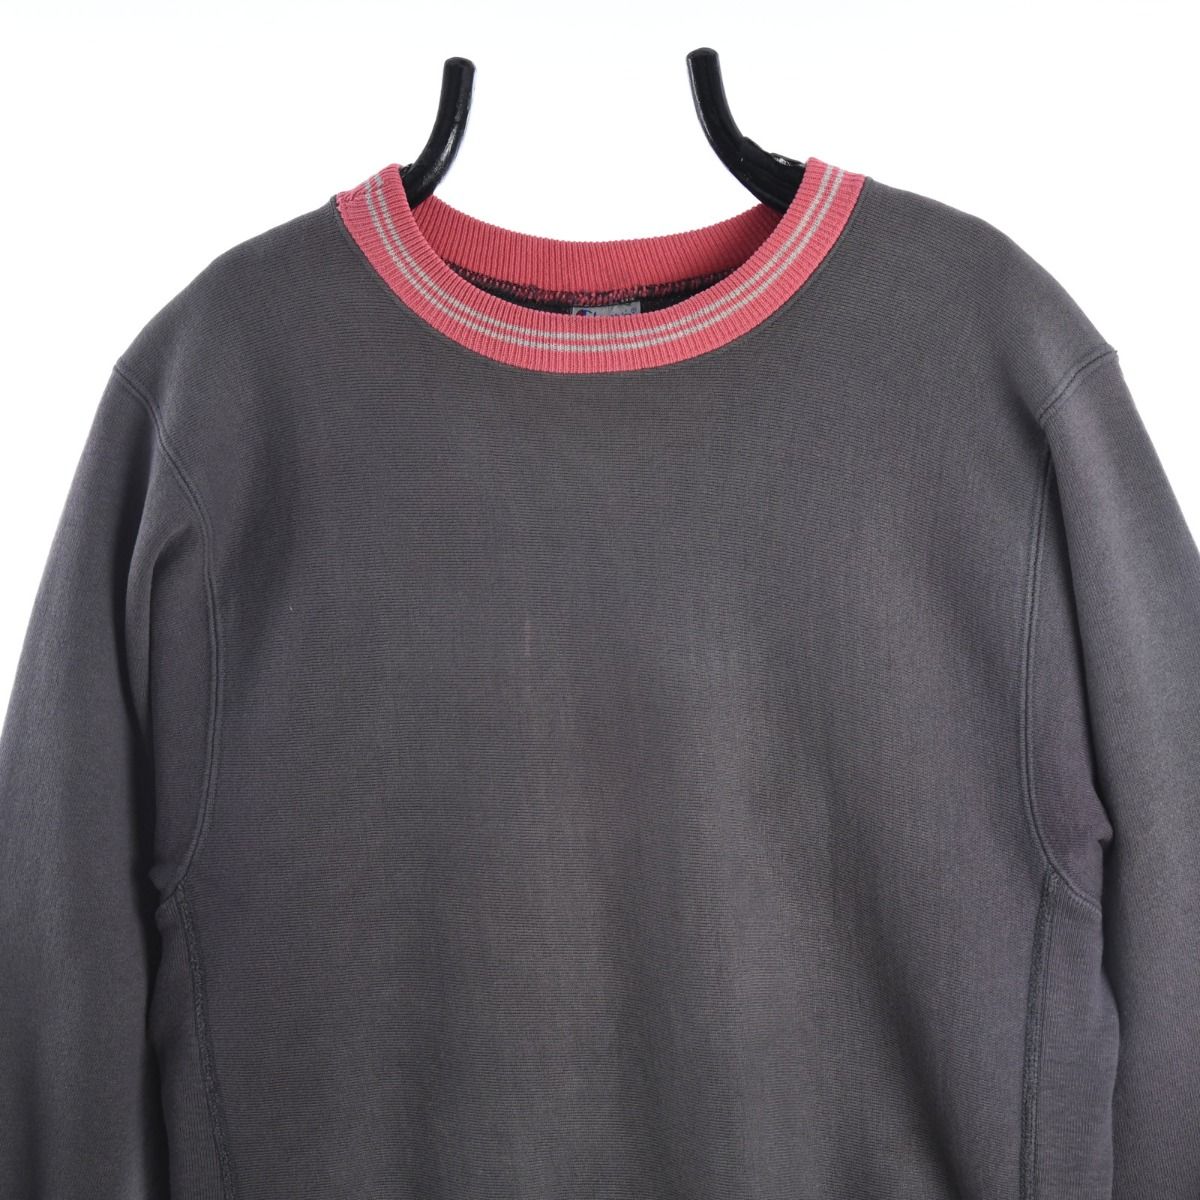 Champion 1990s Reverse Weave Sweatshirt